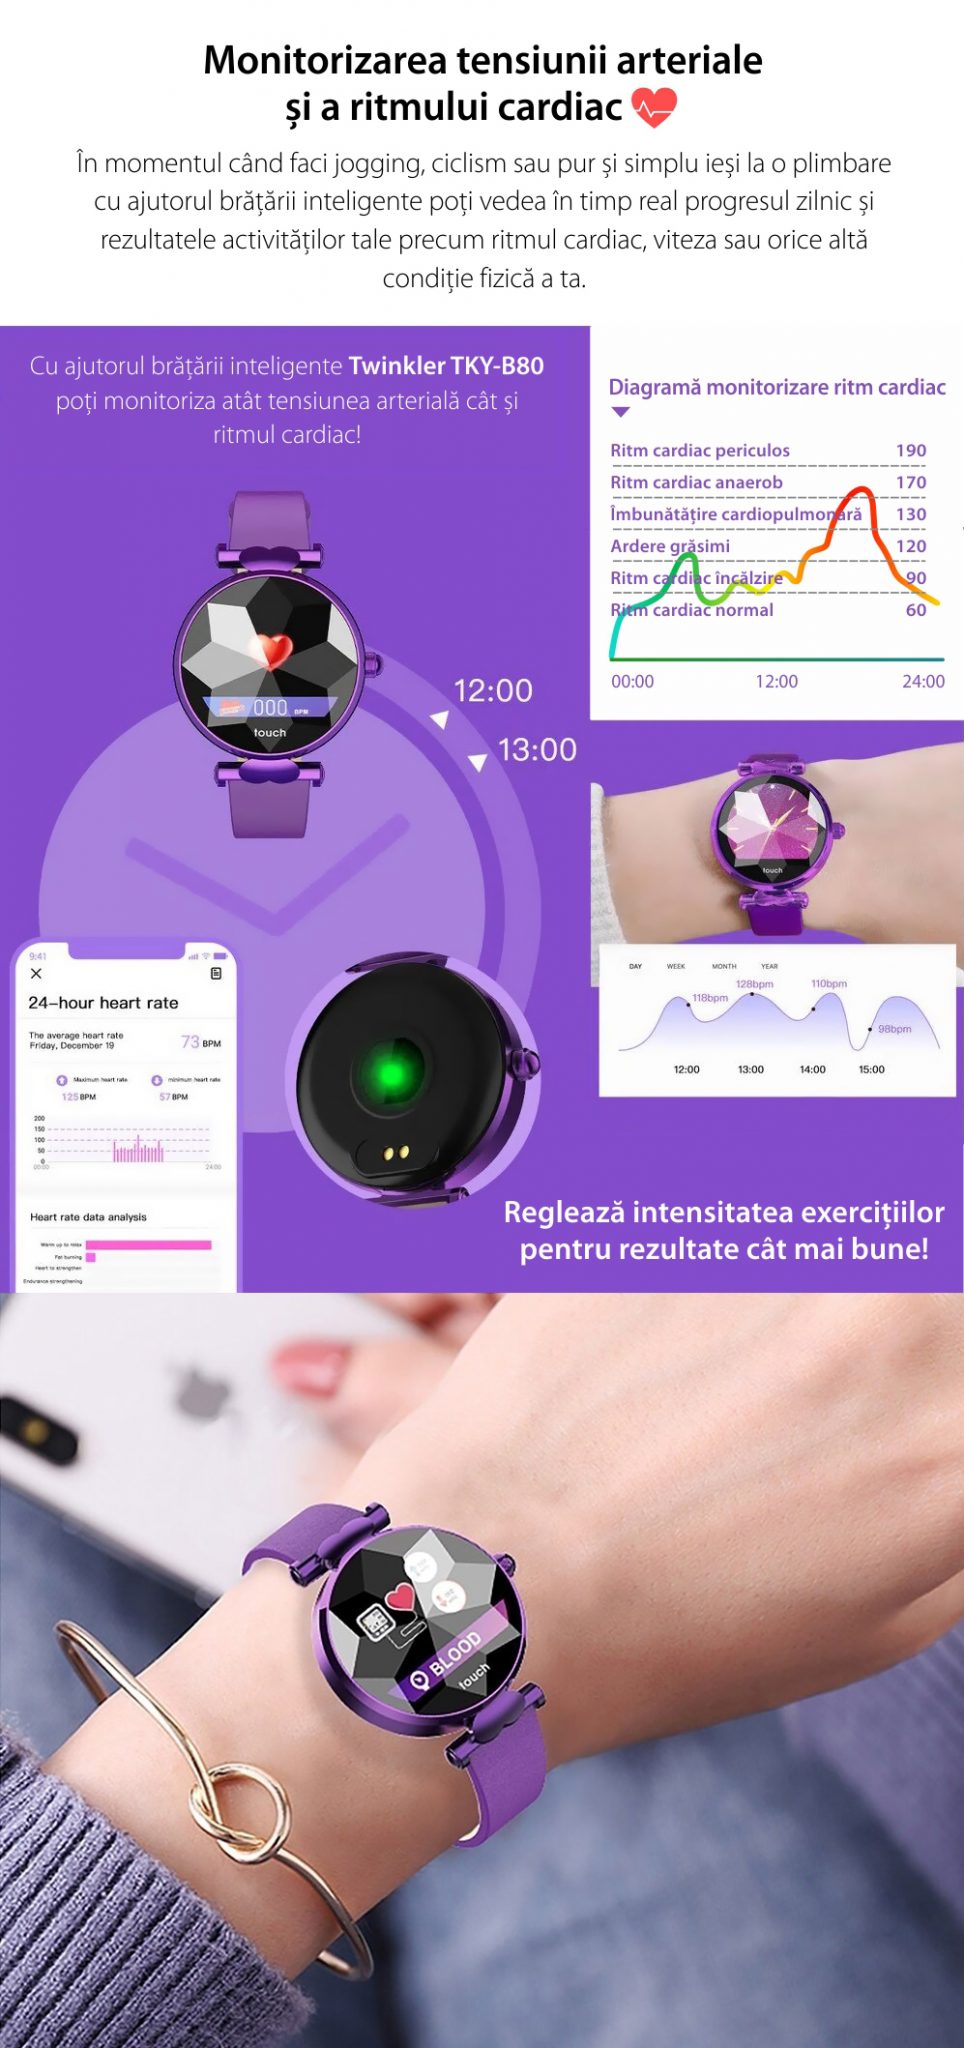 Ceas Smartwatch fitness fashion TKY-B80 Metal cu functie de monitorizare ritm cardiac, Tensiune arteriala, Monitorizare somn, Notificari Apel/ SMS, Argintiu